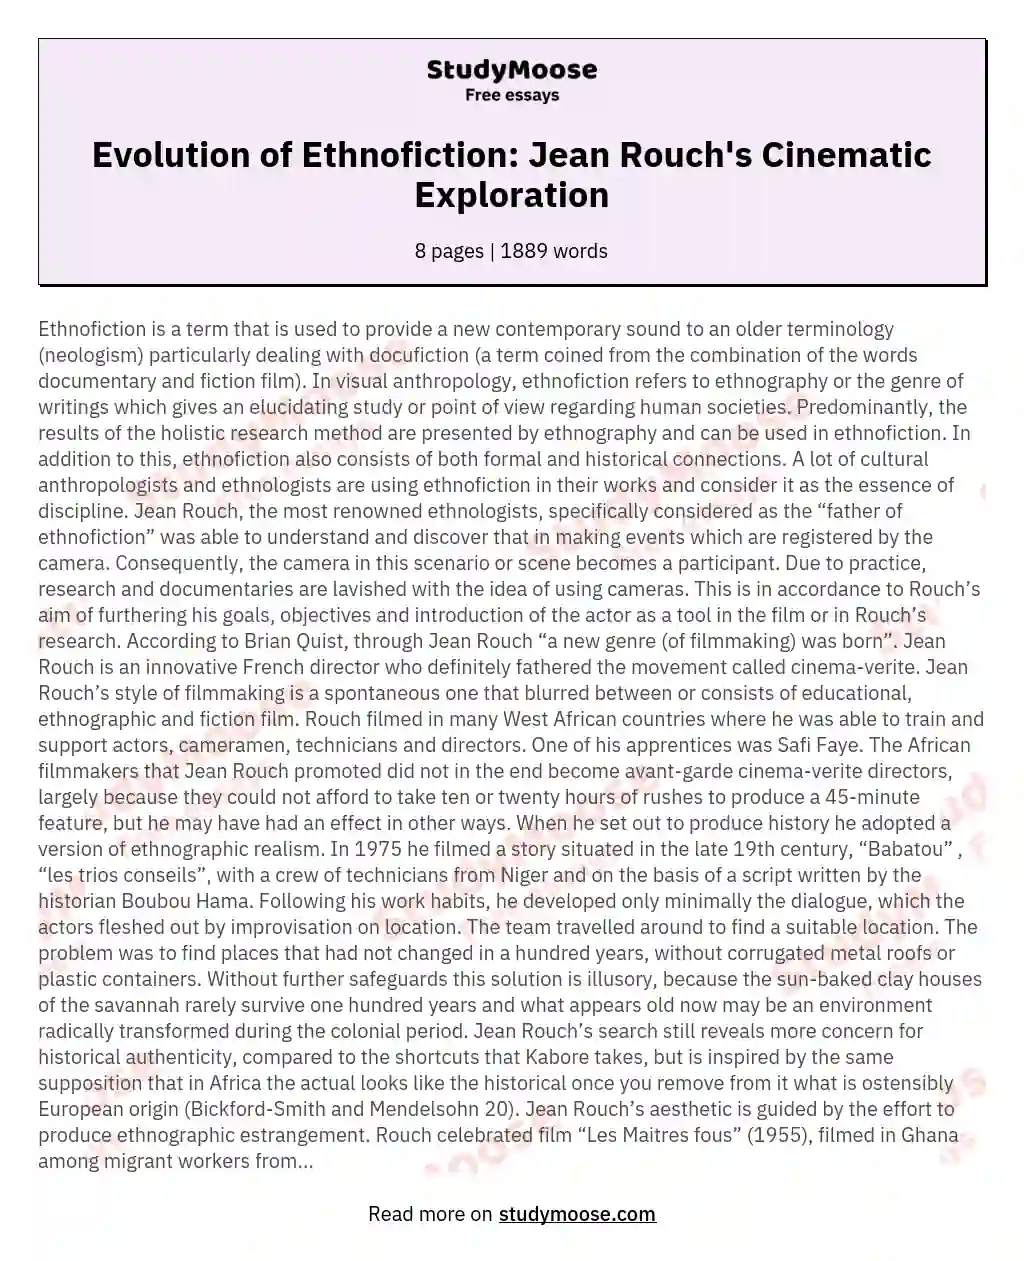 Evolution of Ethnofiction: Jean Rouch's Cinematic Exploration essay